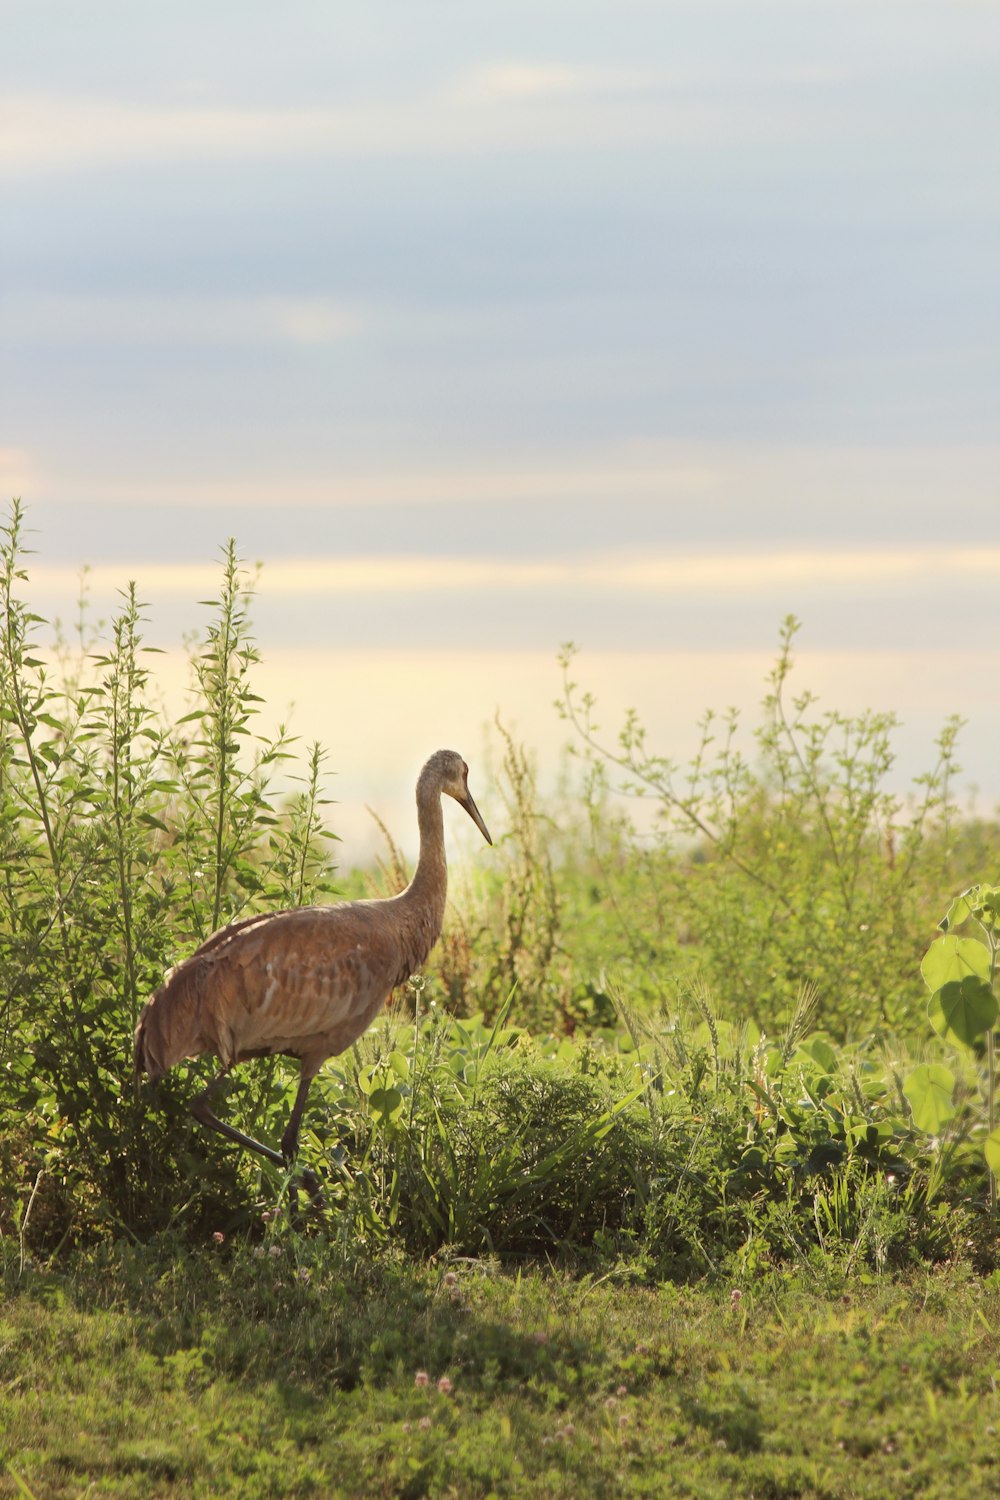 brown bird standing on grass field during daytime